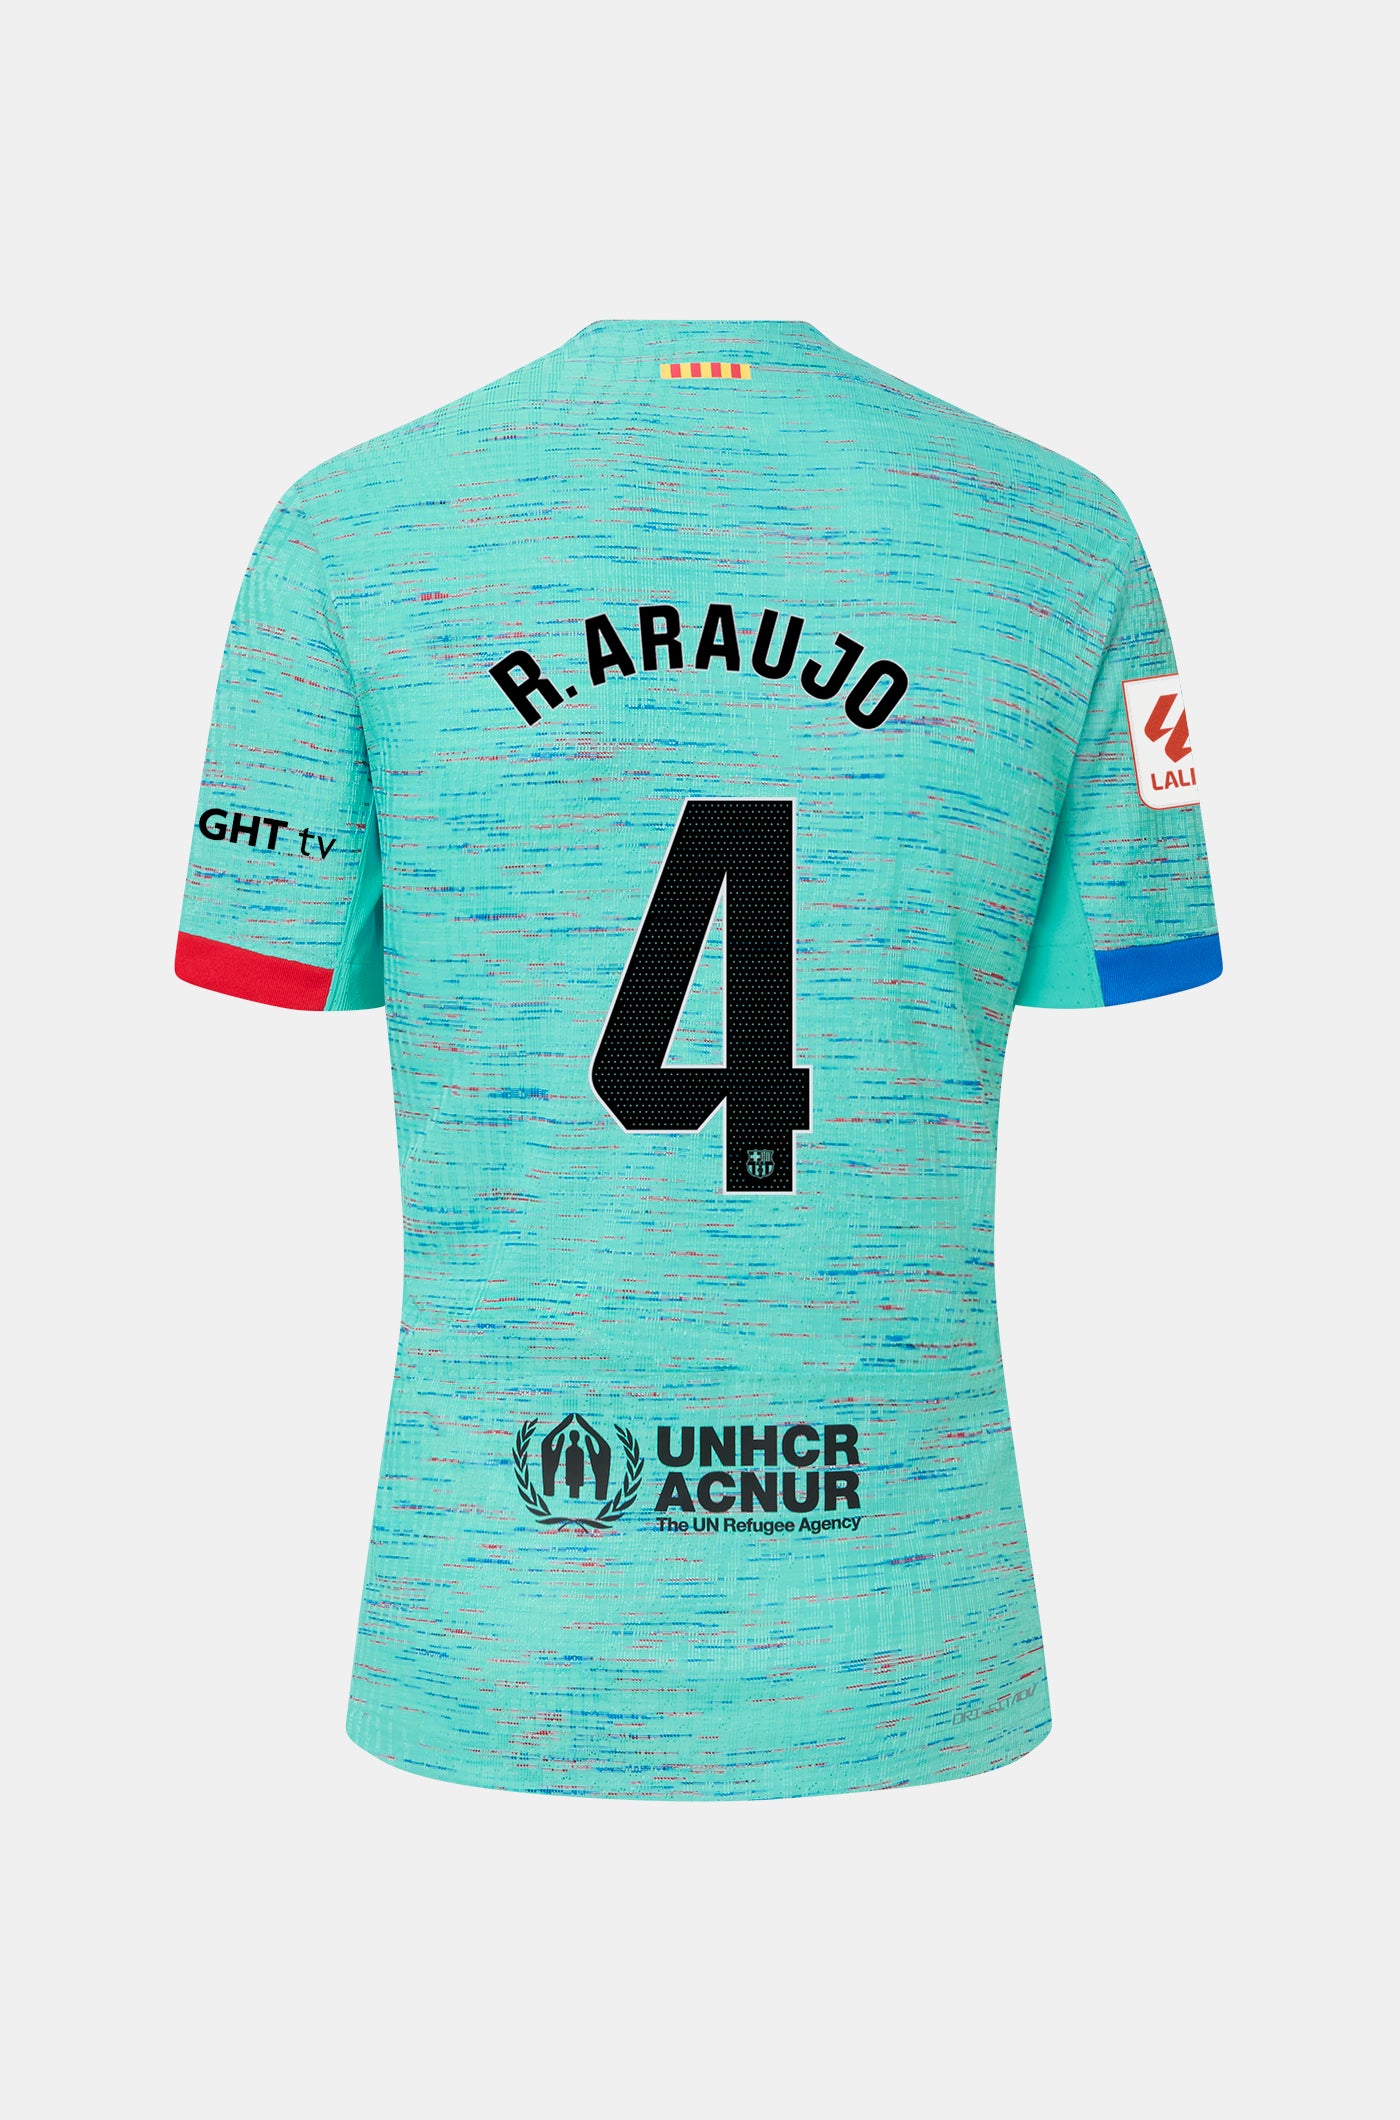 LFP FC Barcelona third shirt 23/24 Player’s Edition  - R. ARAUJO